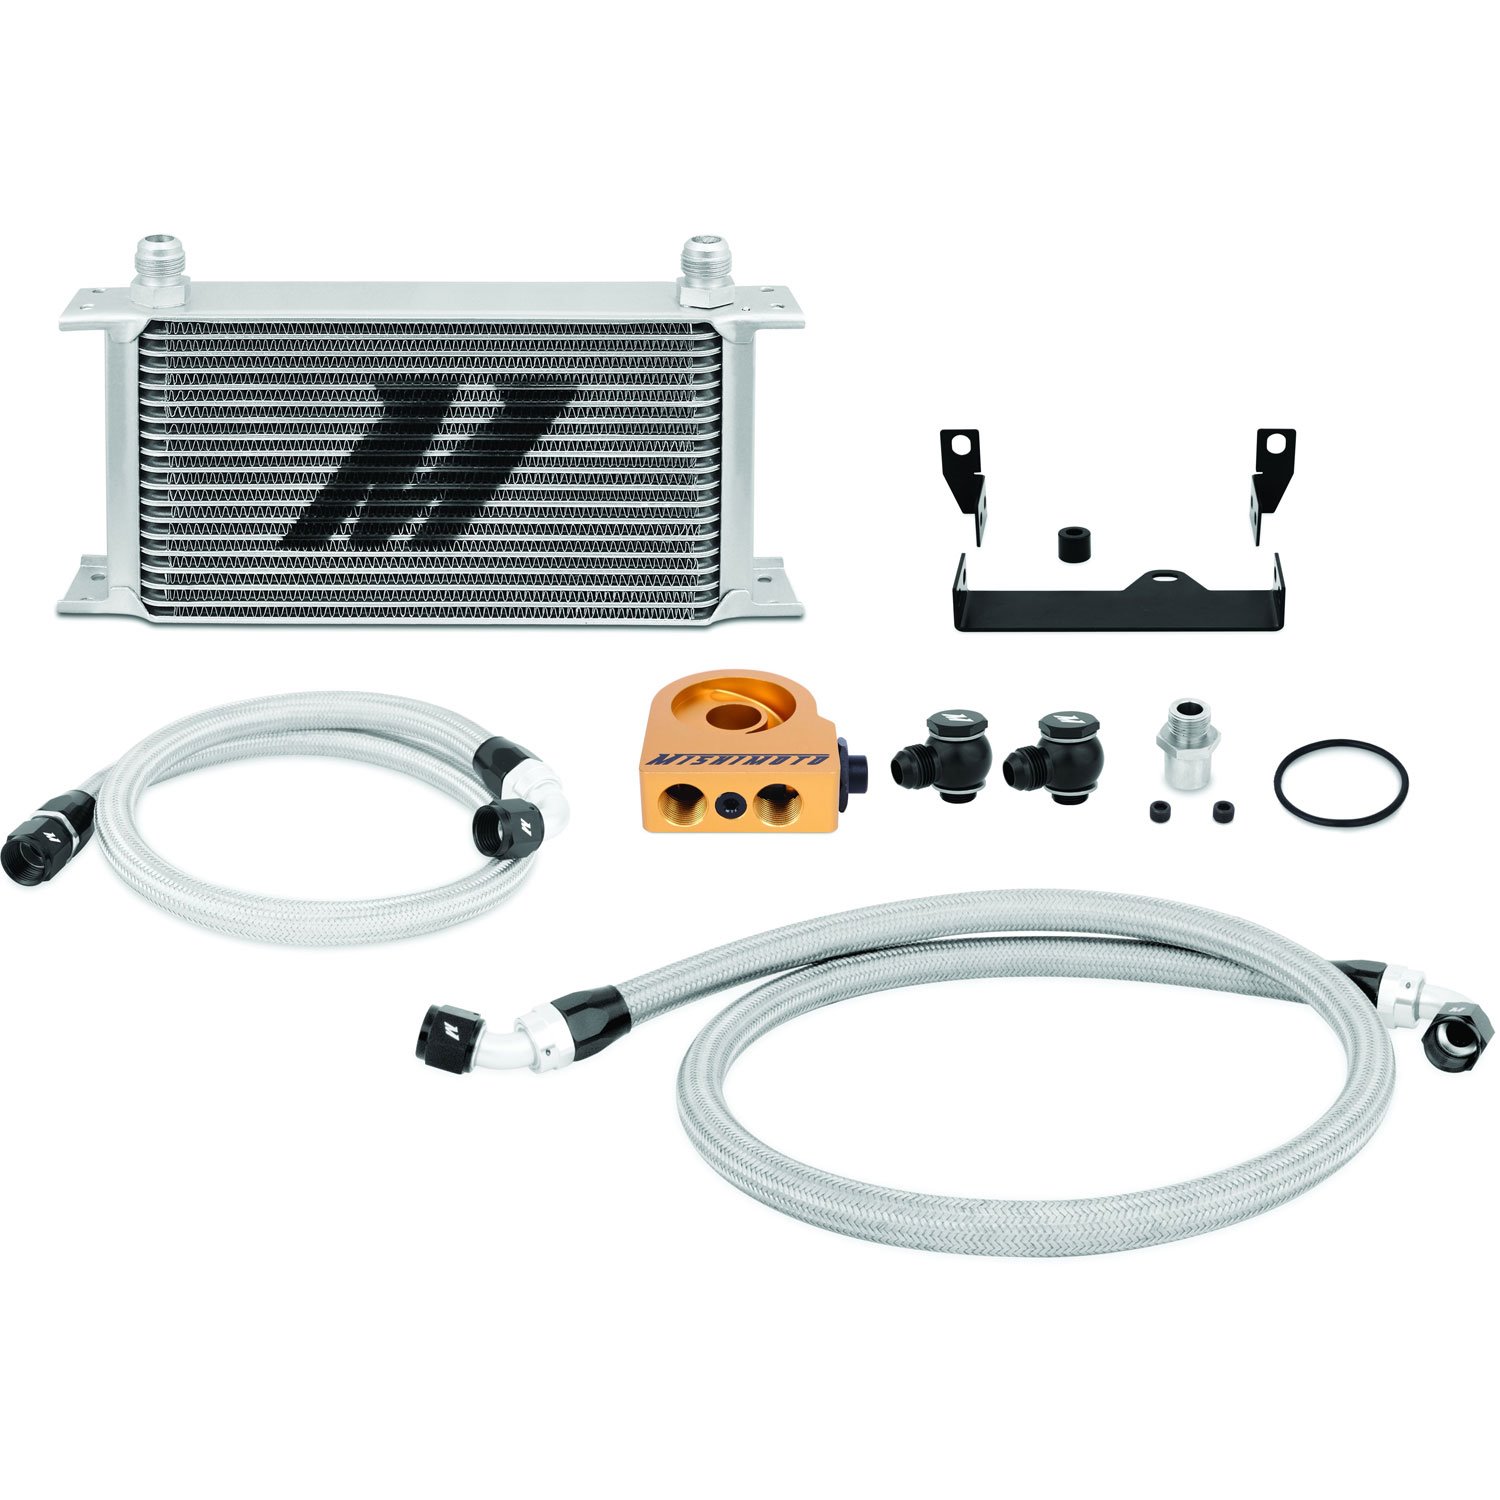 Subaru WRX/STi Thermostatic Oil Cooler Kit - MFG